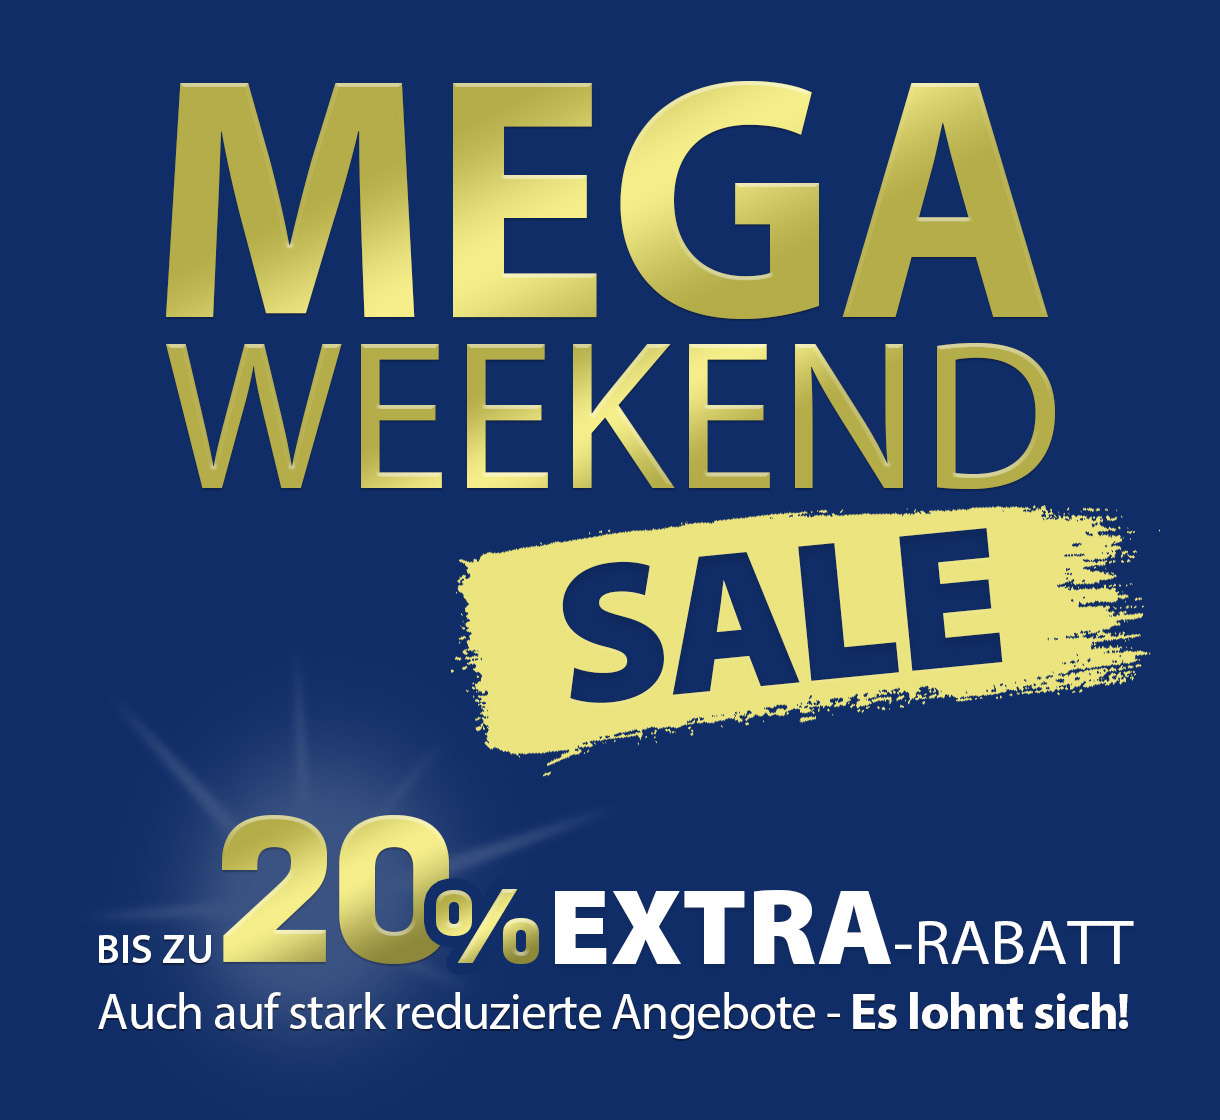 MEGA WEEKEND AKTION!! - bis zu 20% EXTRA-RABATT!!